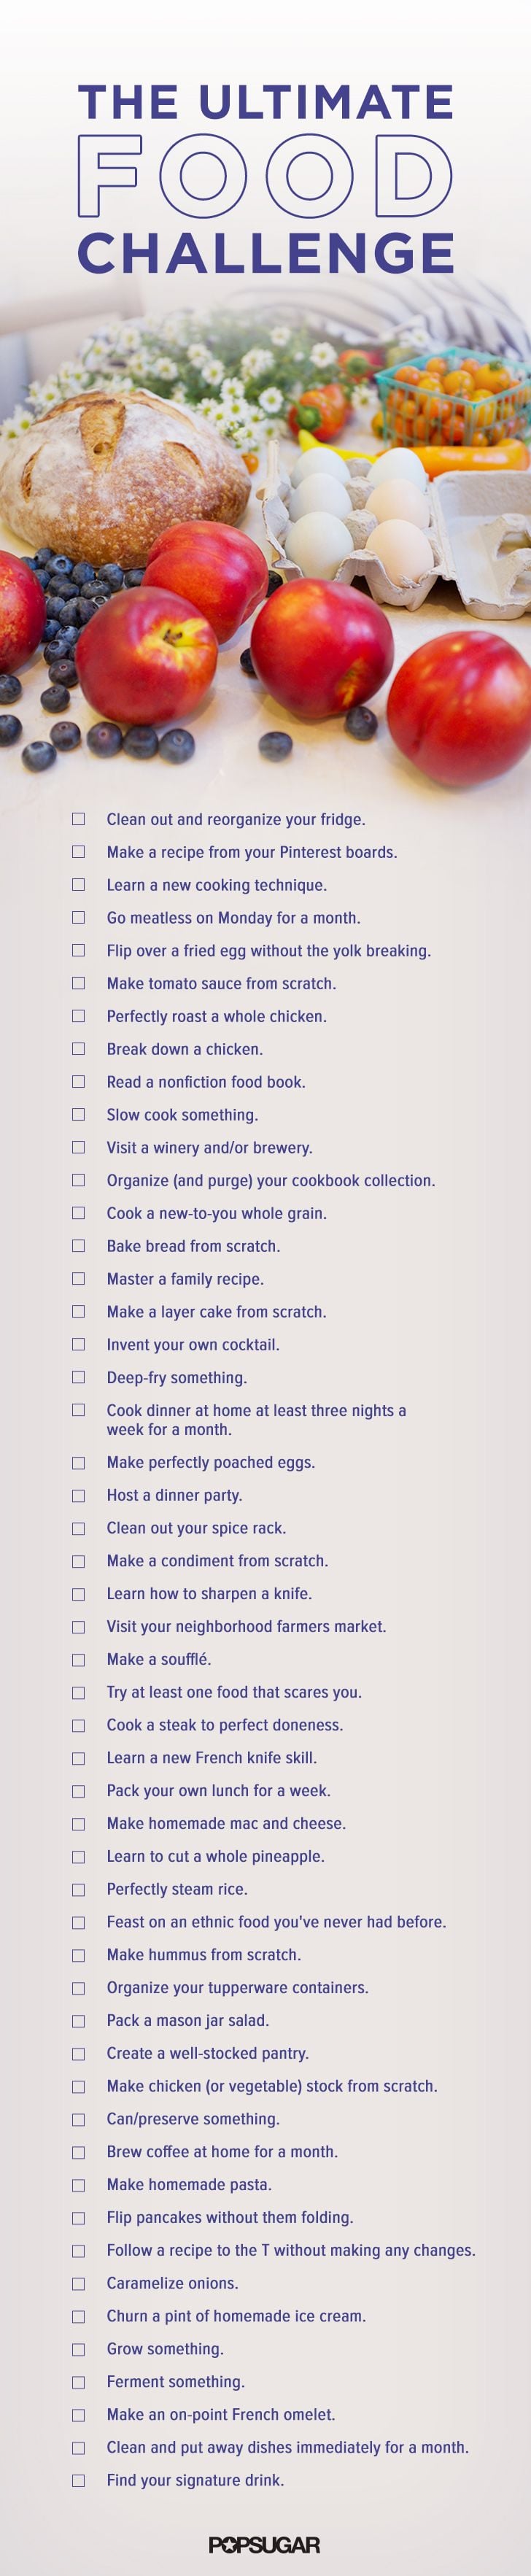 Get the checklist: 51 foodie goals to accomplish